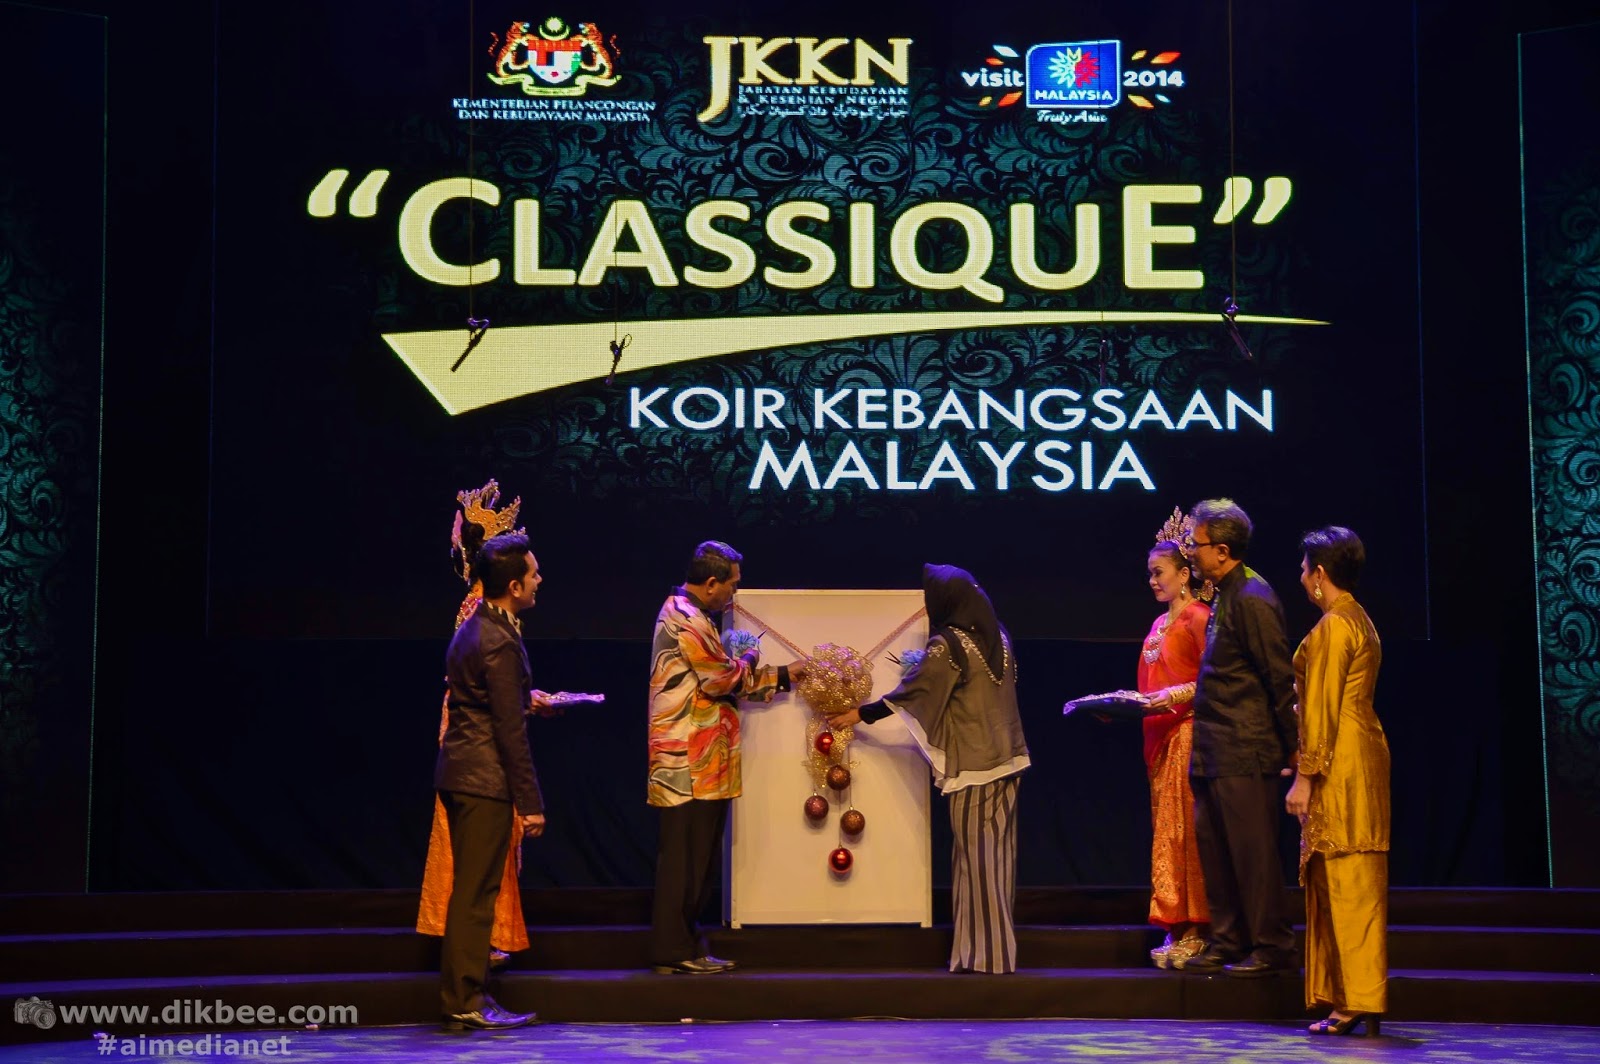 Konsert Koir Kebangsaan Malaysia Classique